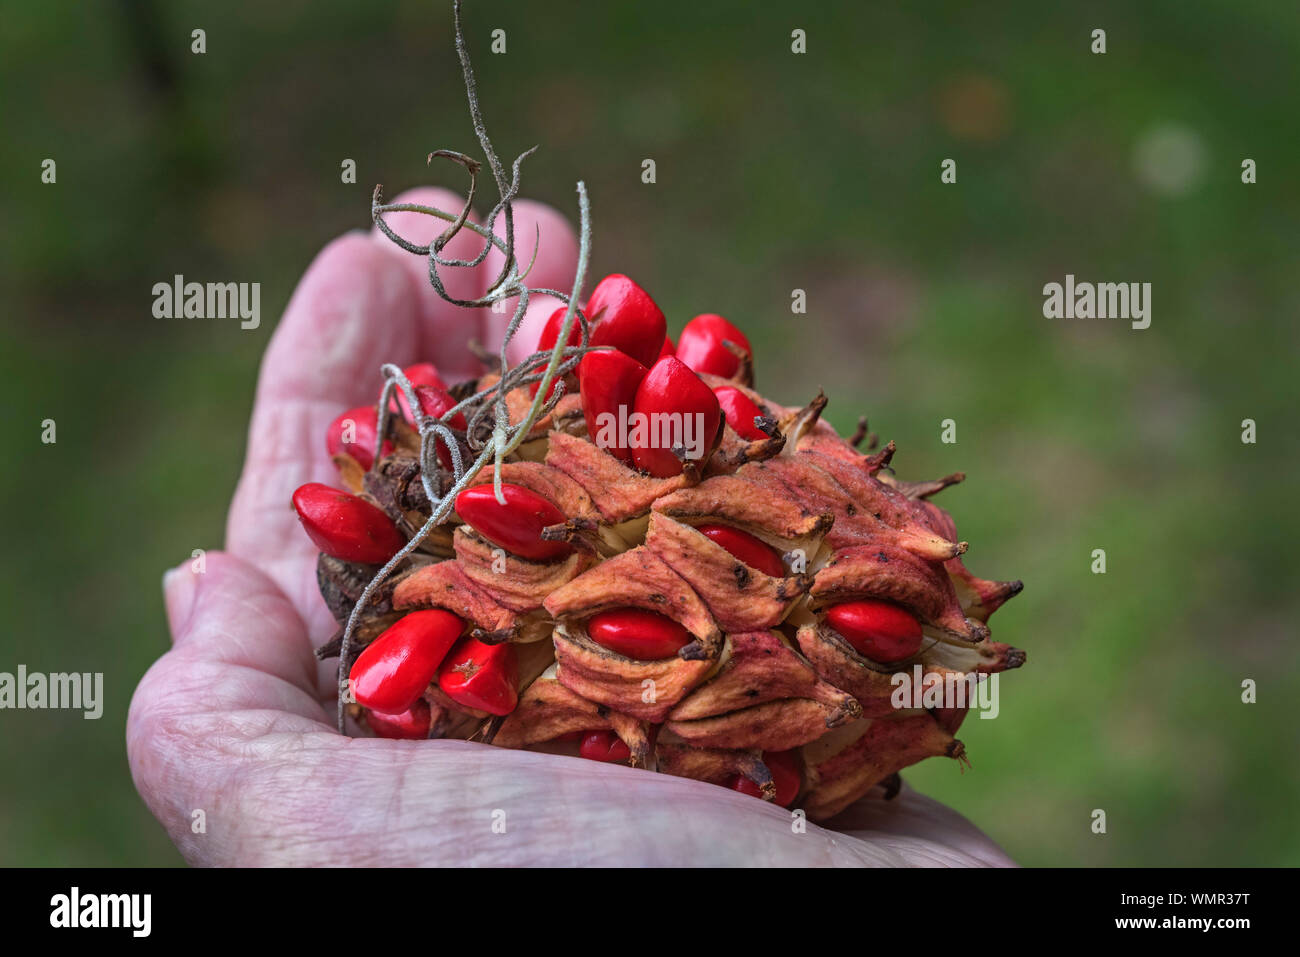 Southern Magnolia tree seed pod. Stock Photo